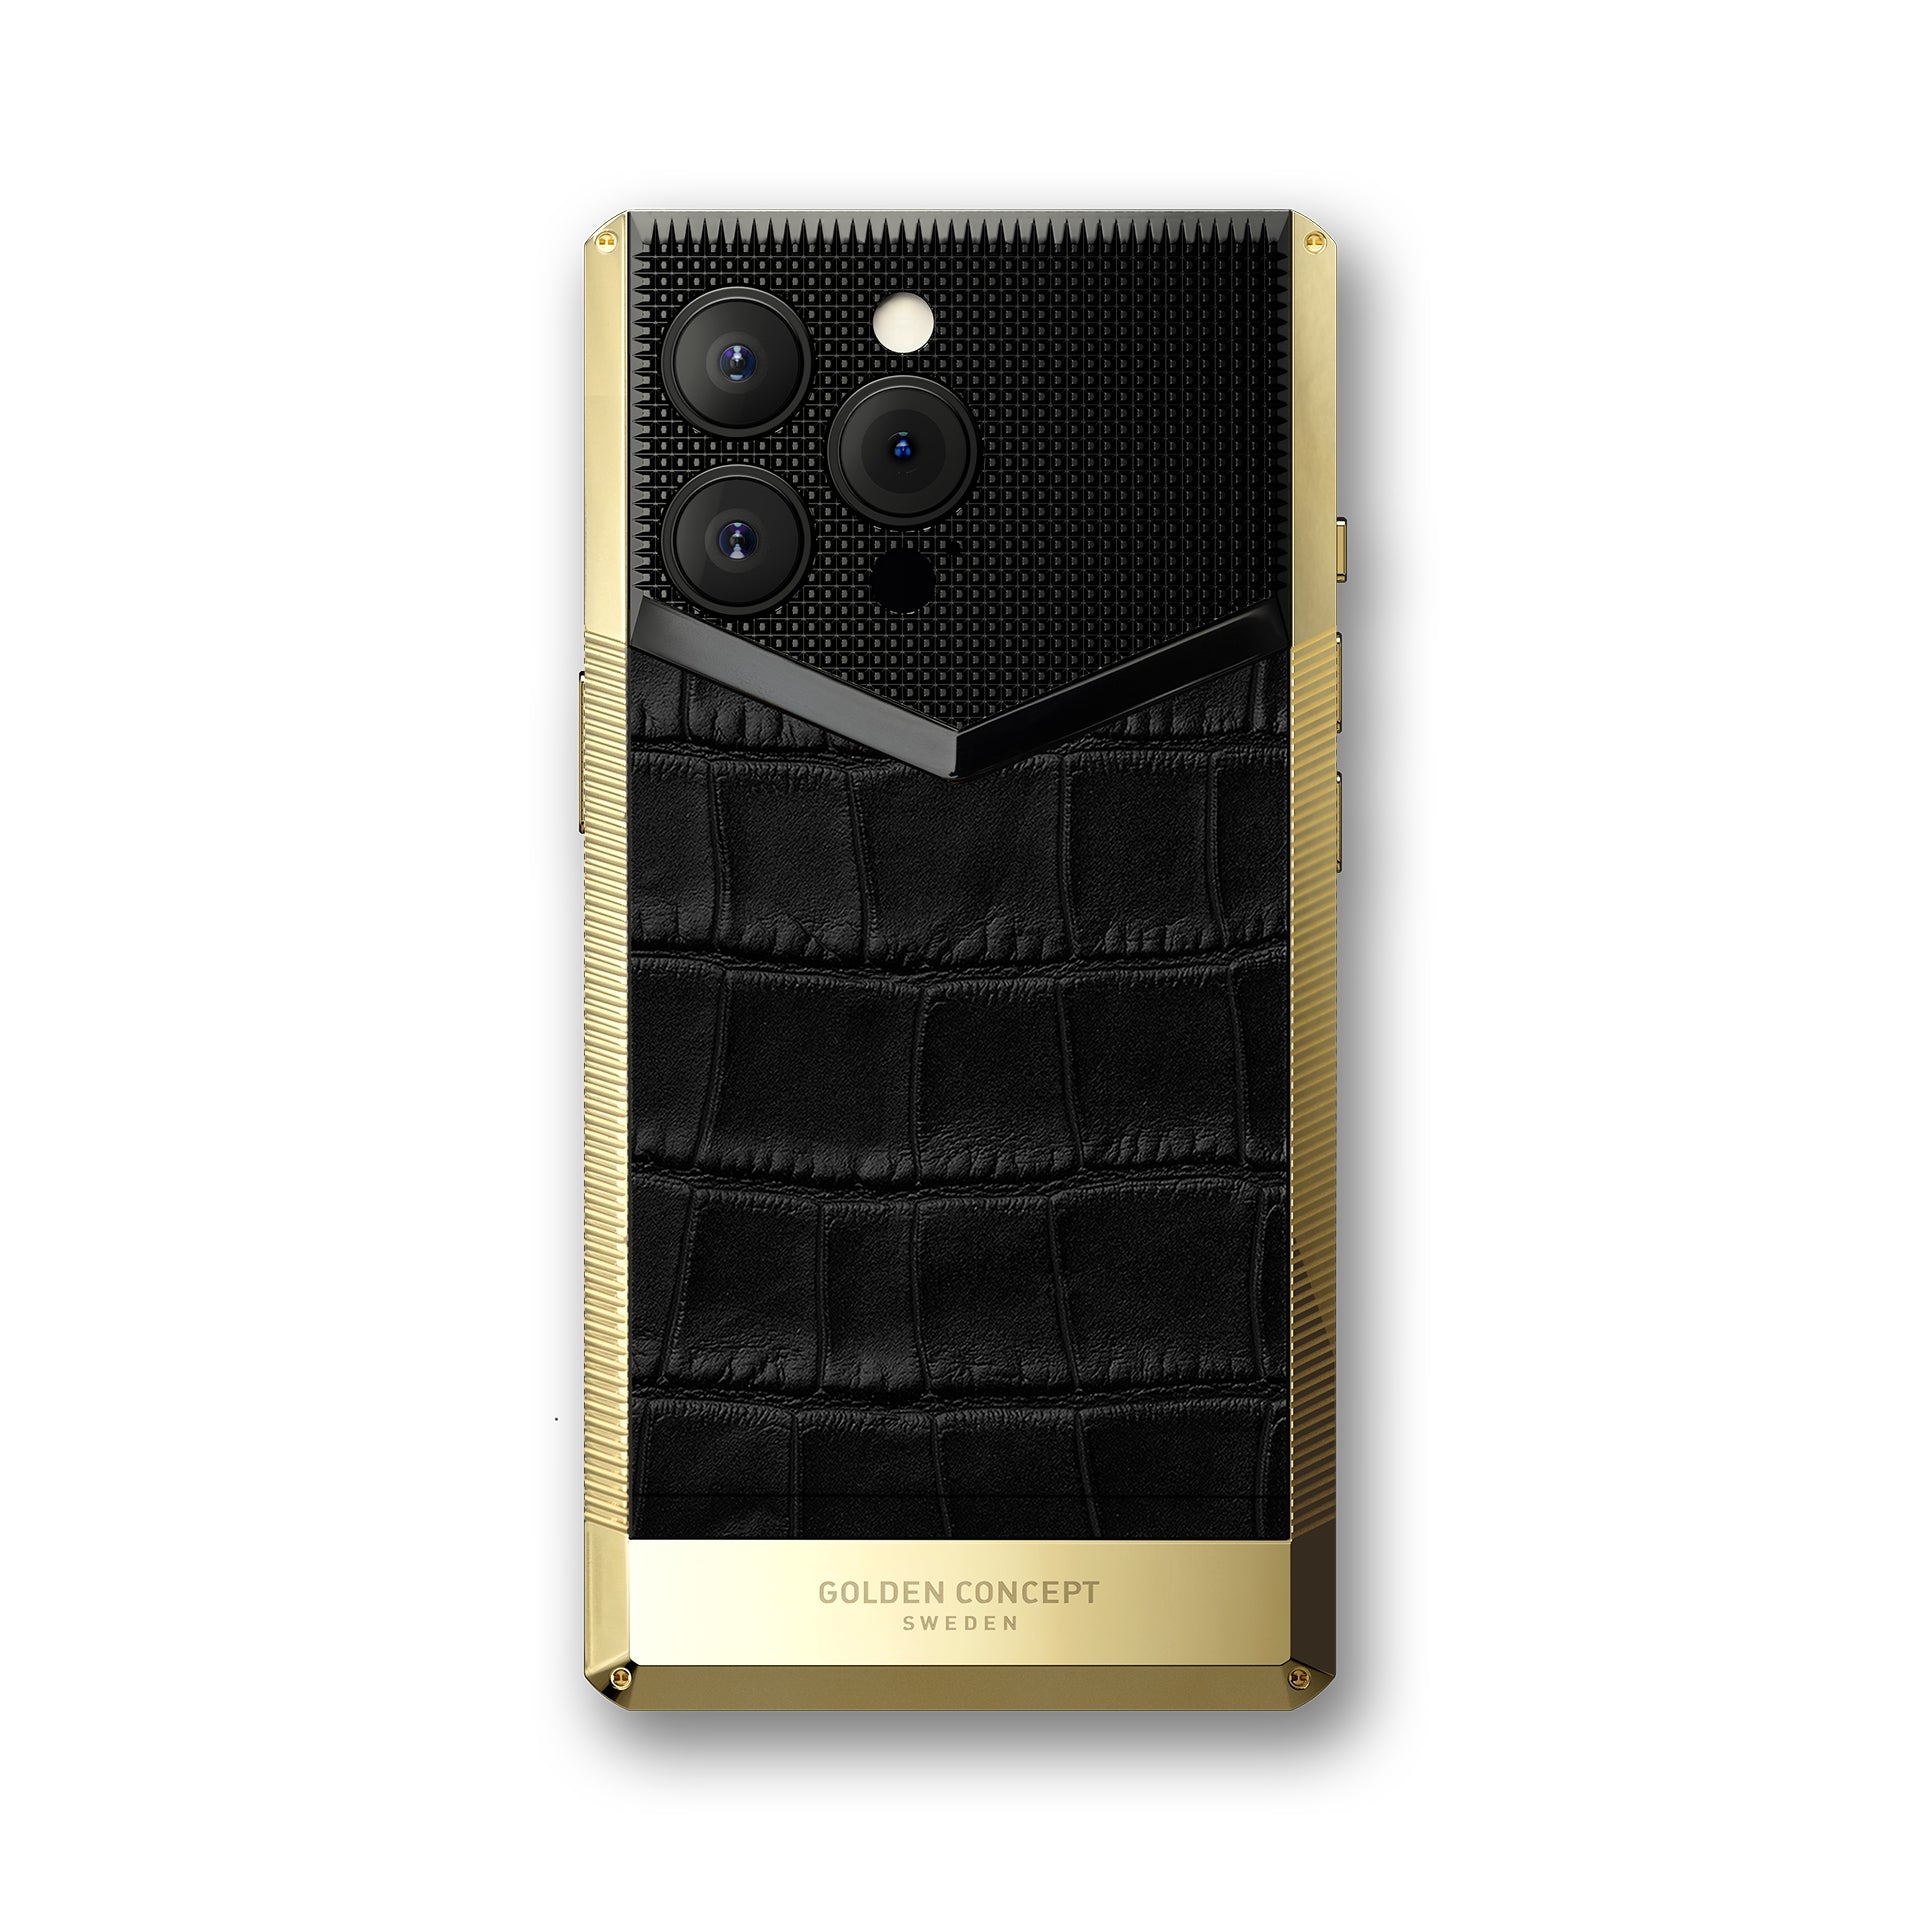 Golden Concept - iPhone Case / CLS - Gold